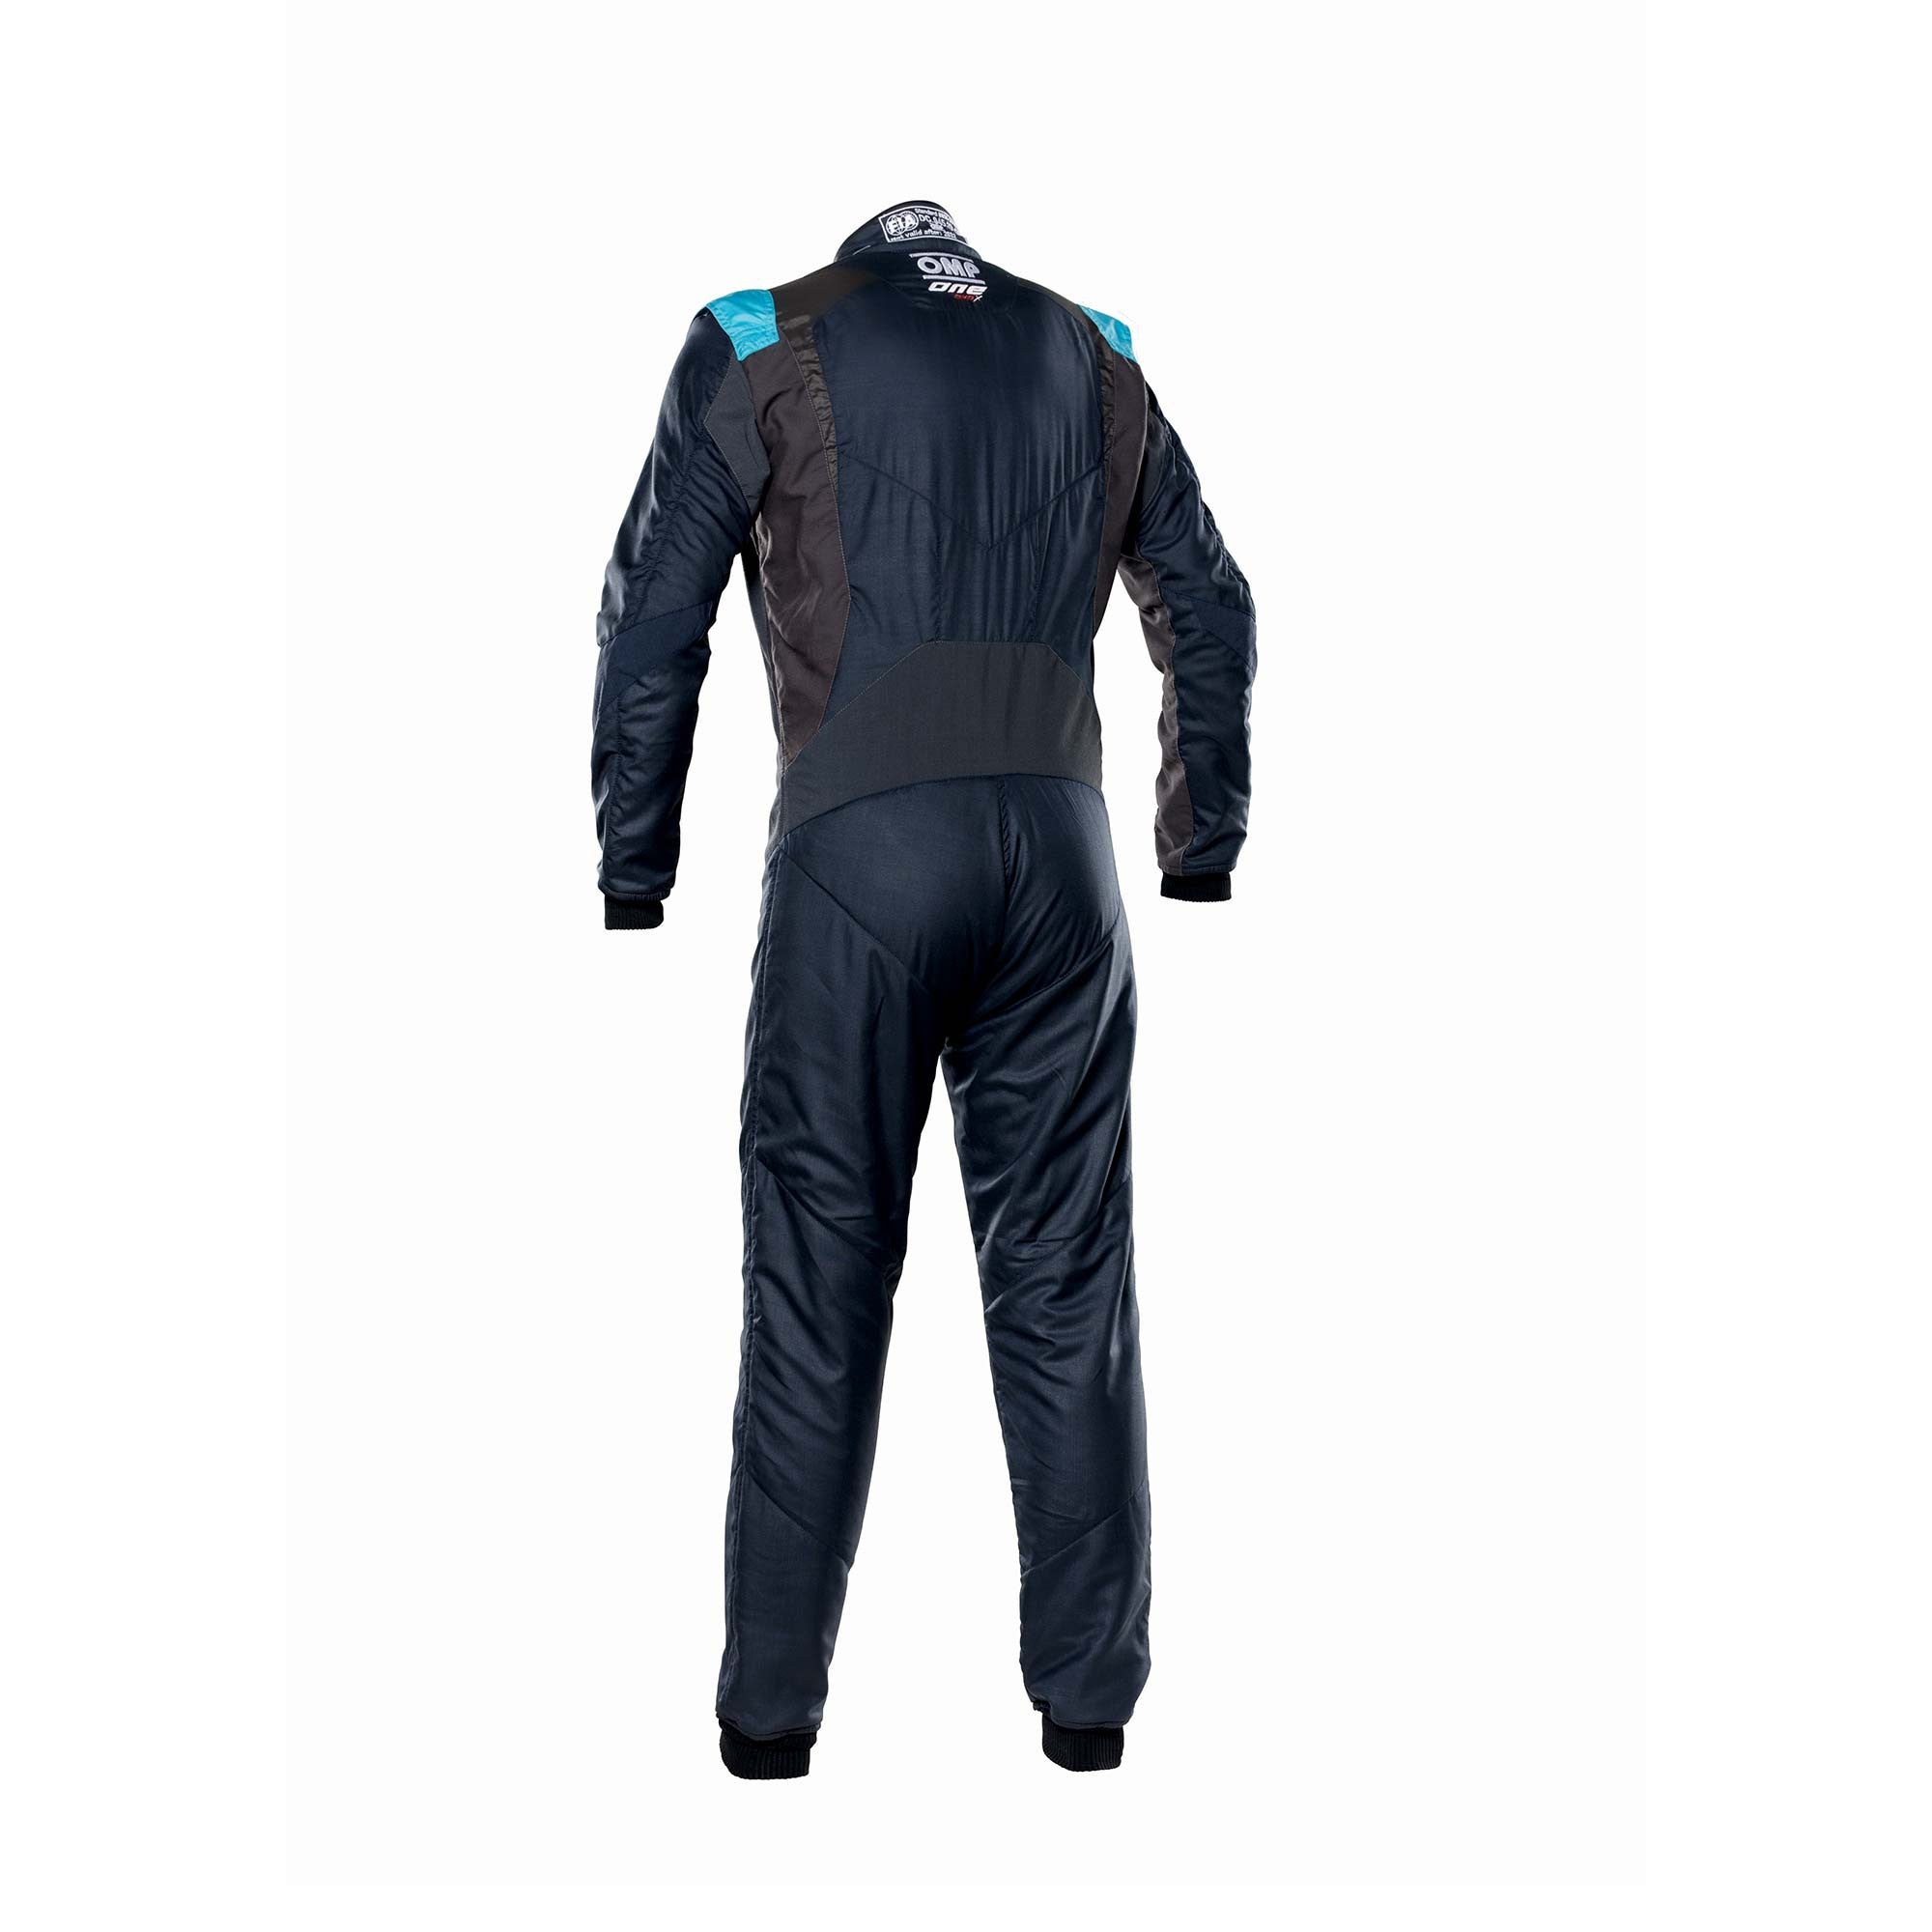 OMP IA0-1861-A01-246-52 Racing suit ONE EVO X, FIA 8856-2018, navy blue/gray/cyan, size 52 Photo-1 